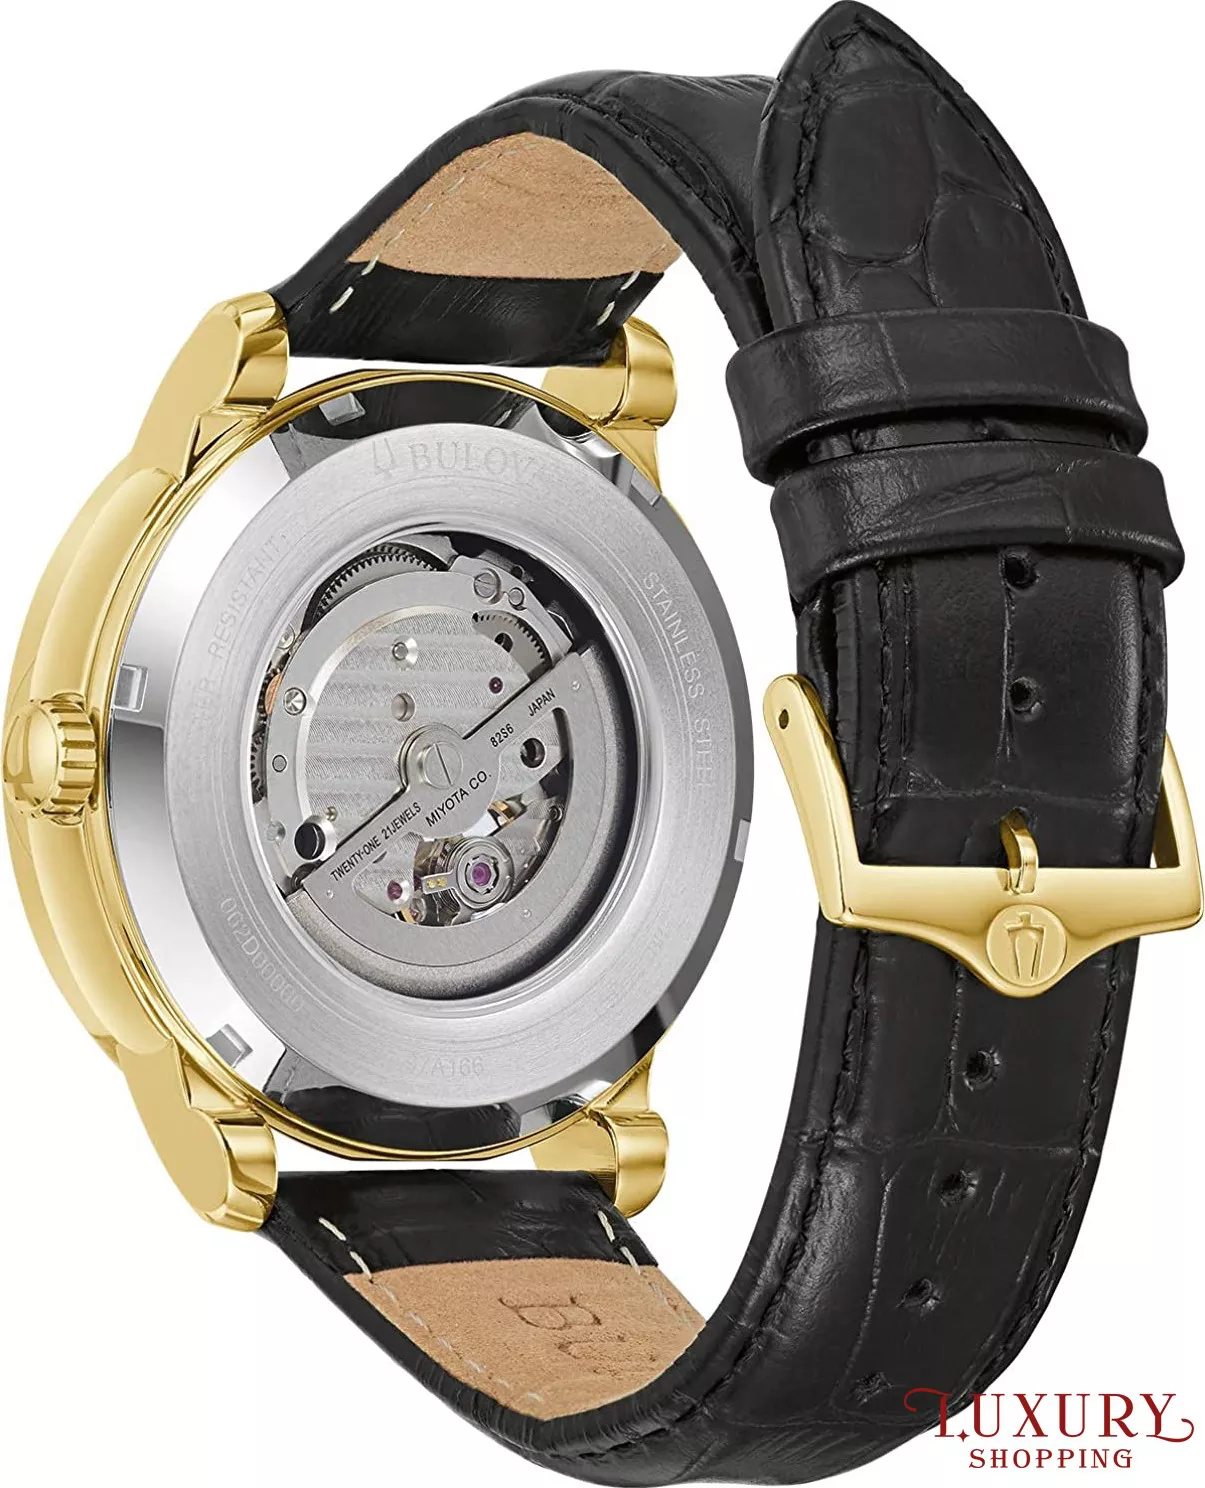 Bulova Men's Classic Automatic Watch 45mm